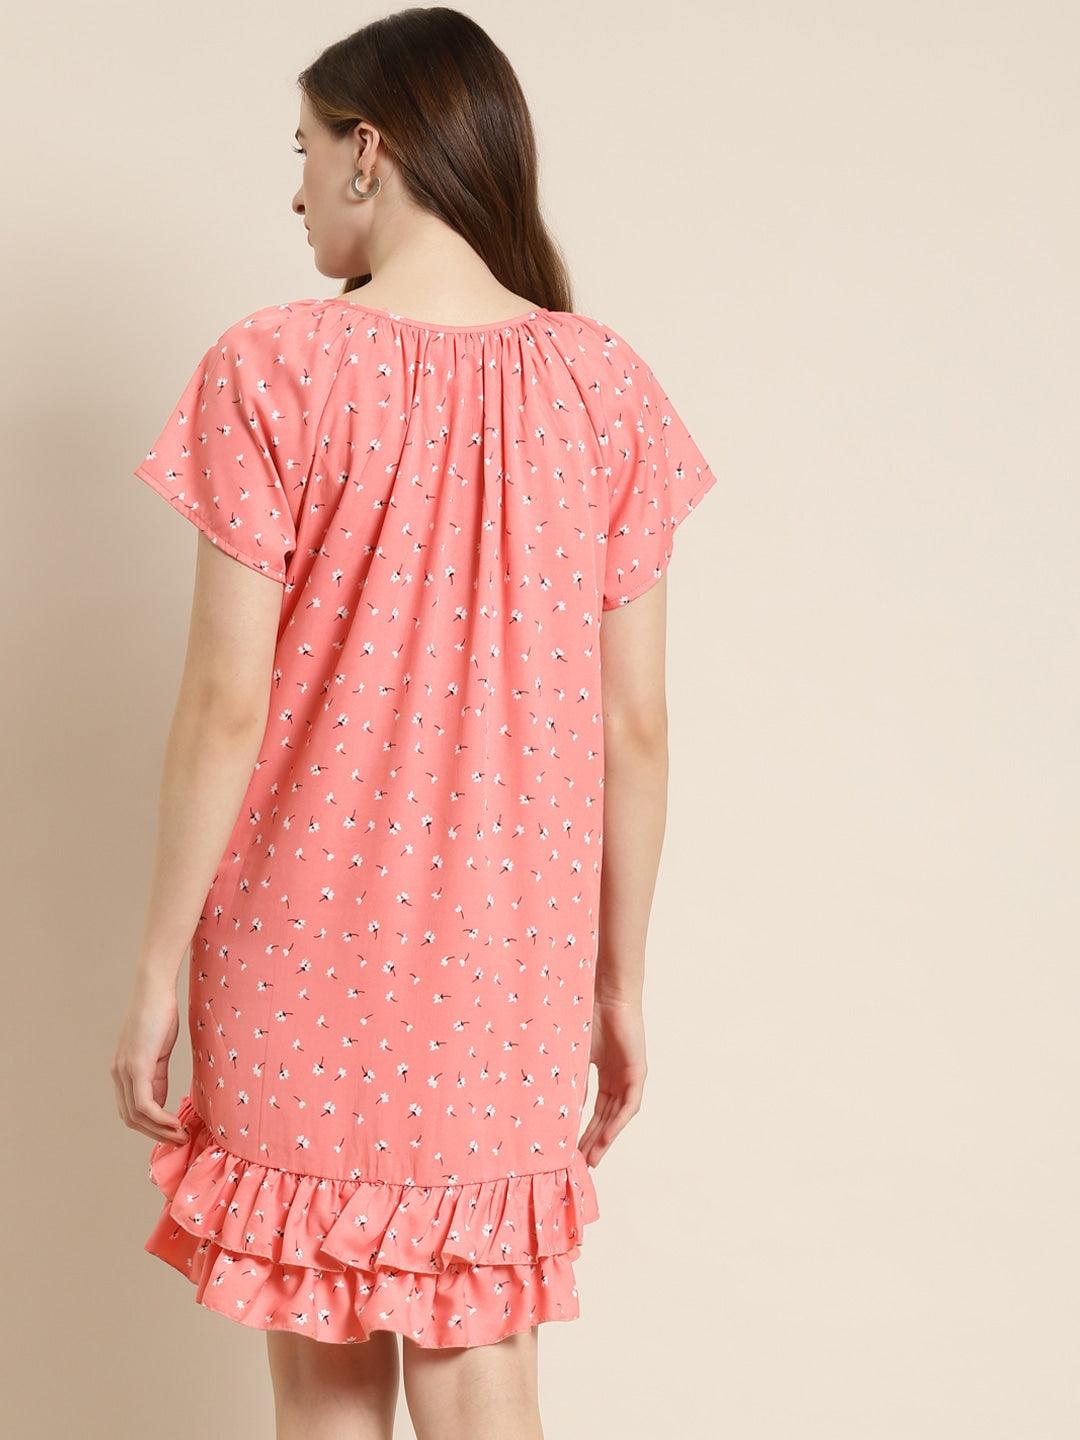 Qurvii Pink & White Floral Print Tie-Up Neck Shift Dress - Qurvii India